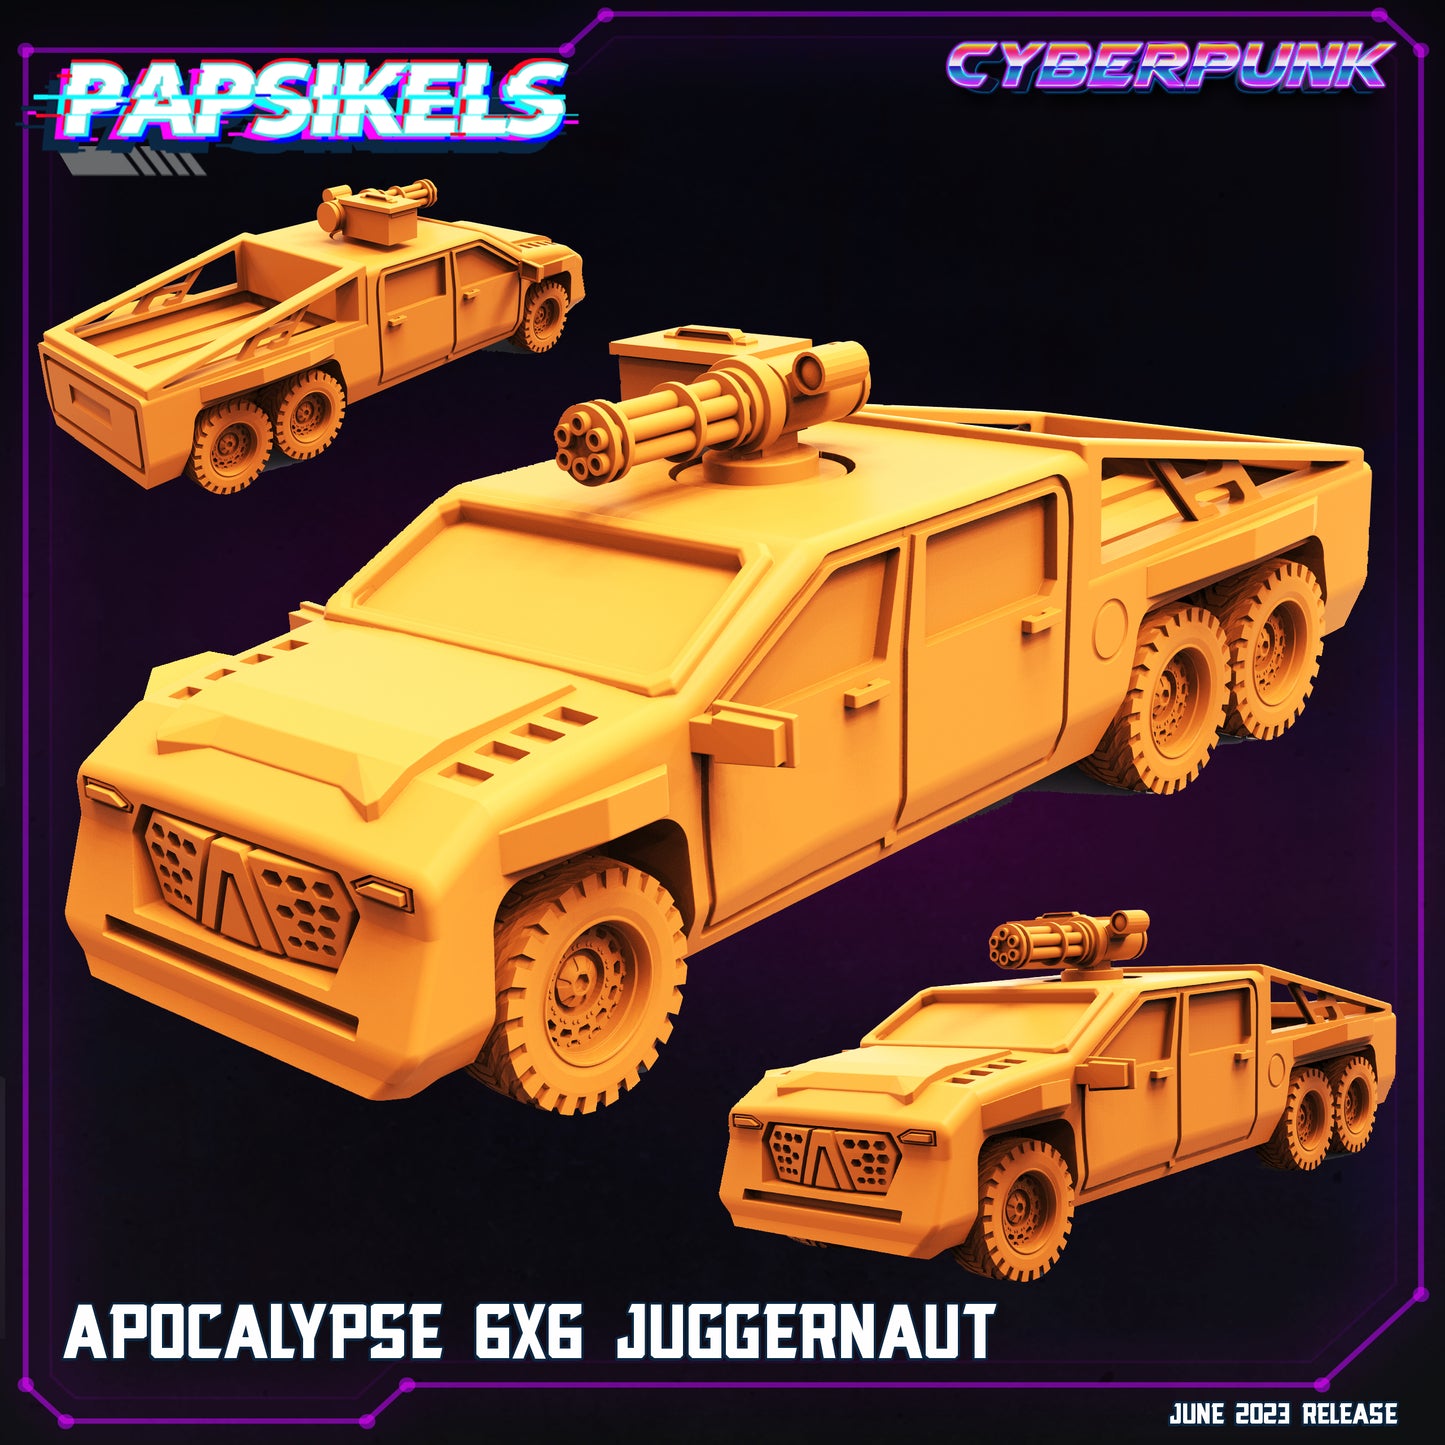 Apocalypse 6x6 Juggernaut